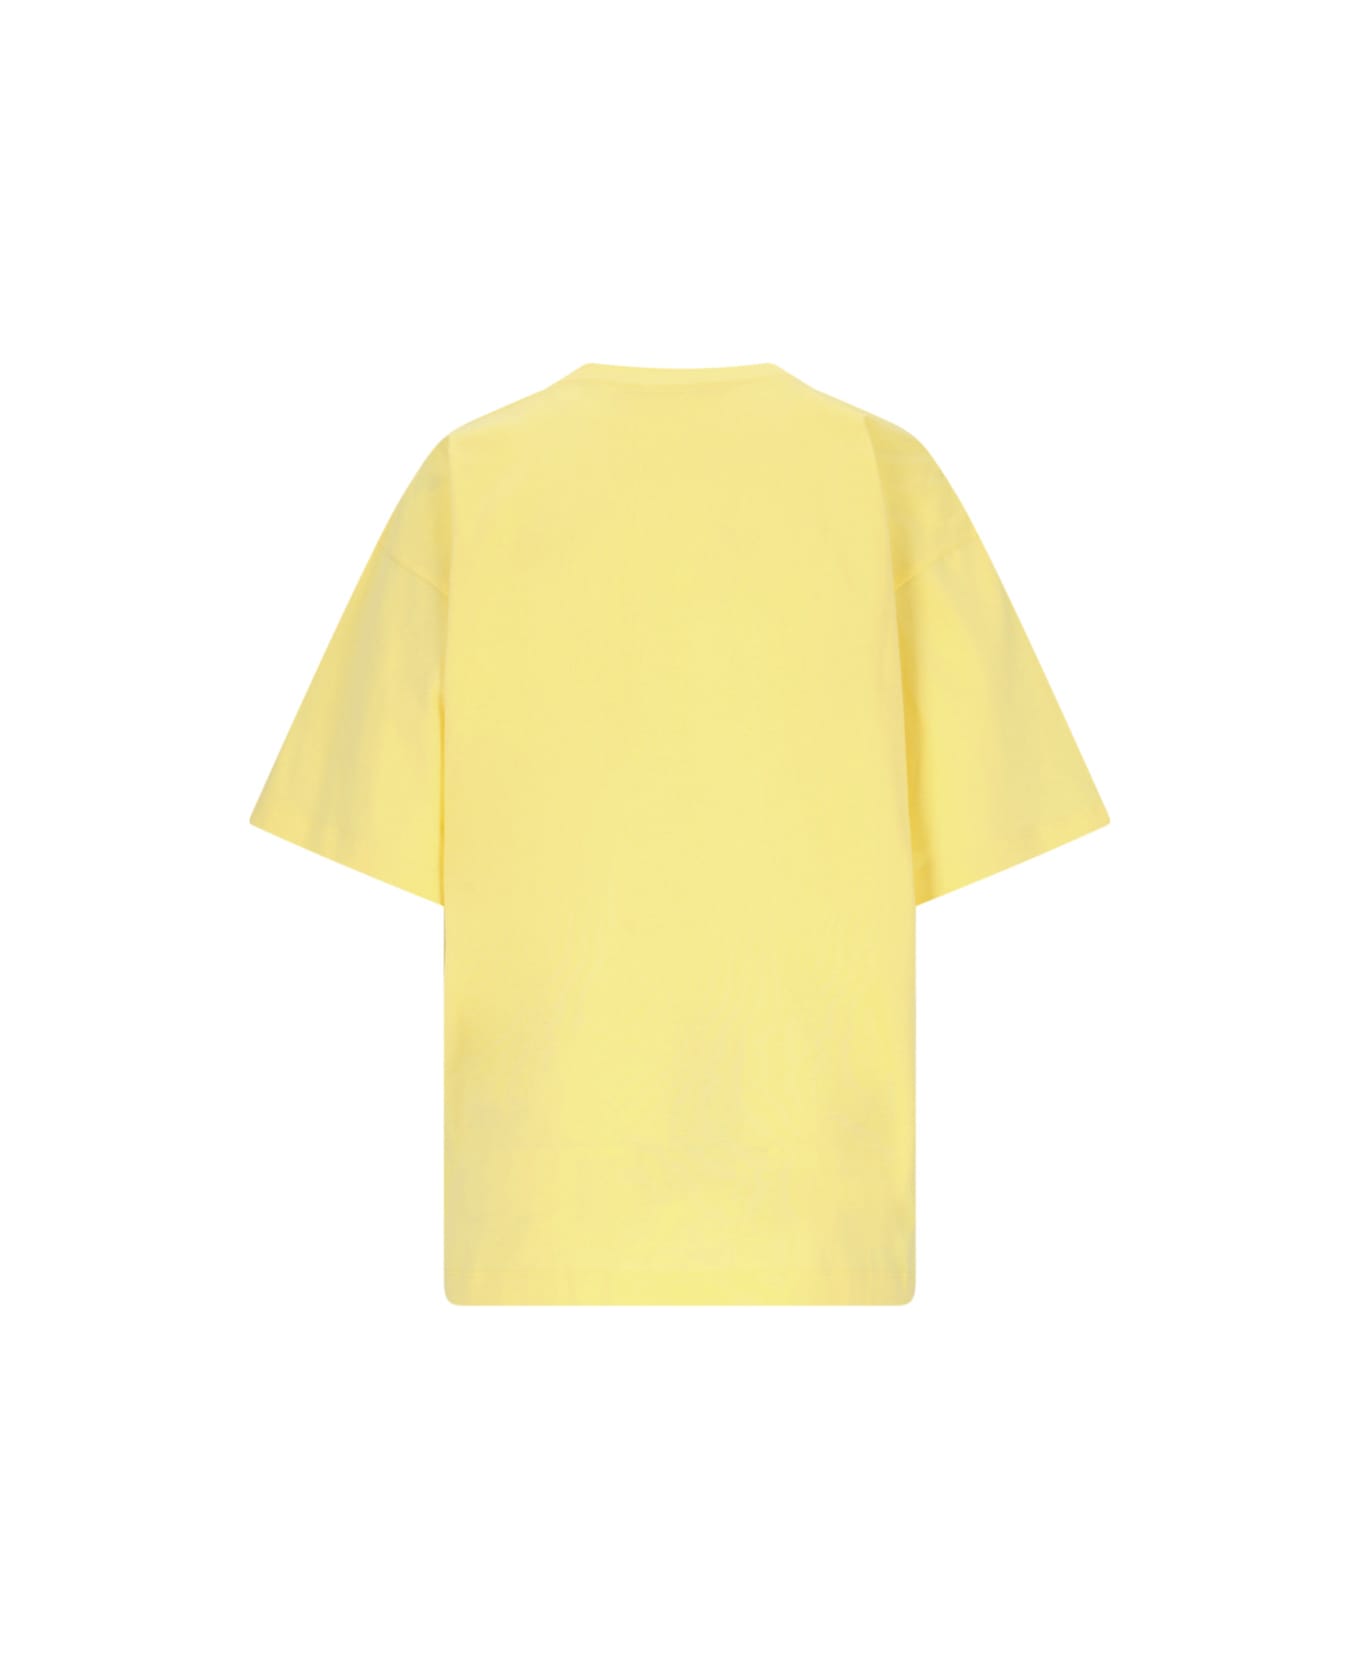 Marni Logo T-shirt - Yellow